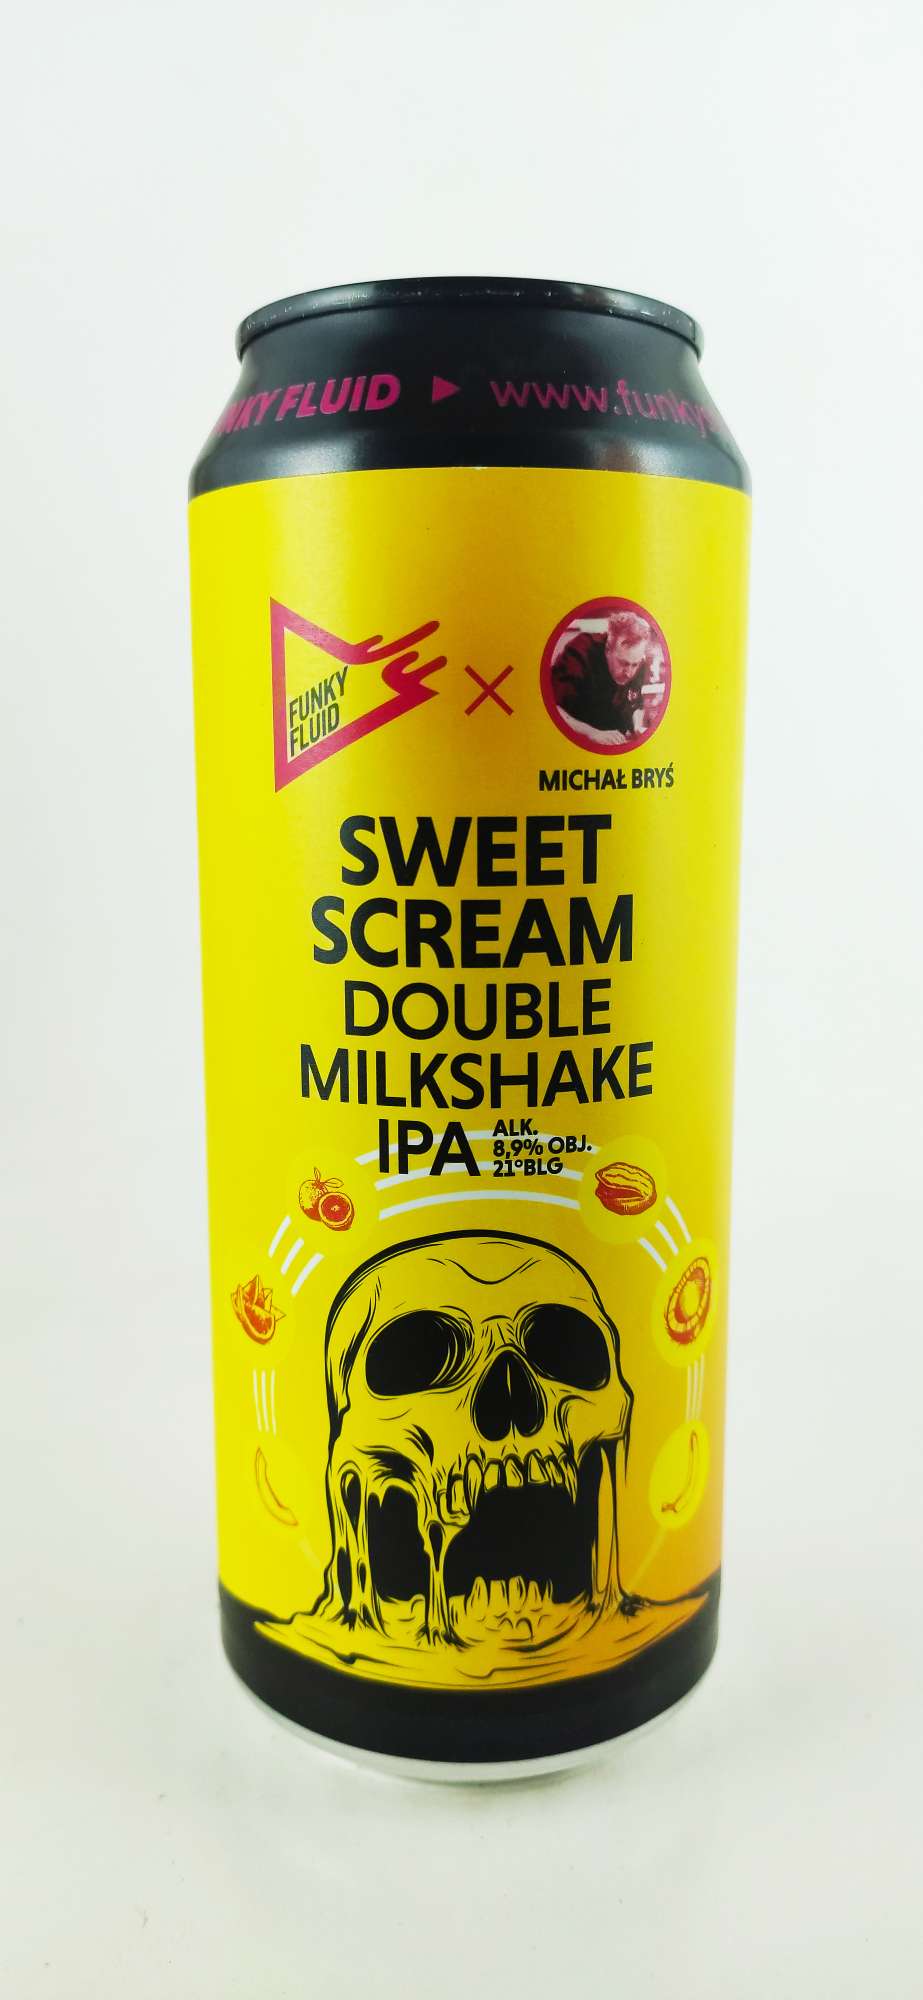 Funky Fluid Sweet Cream Double Milkshake IPA 21°